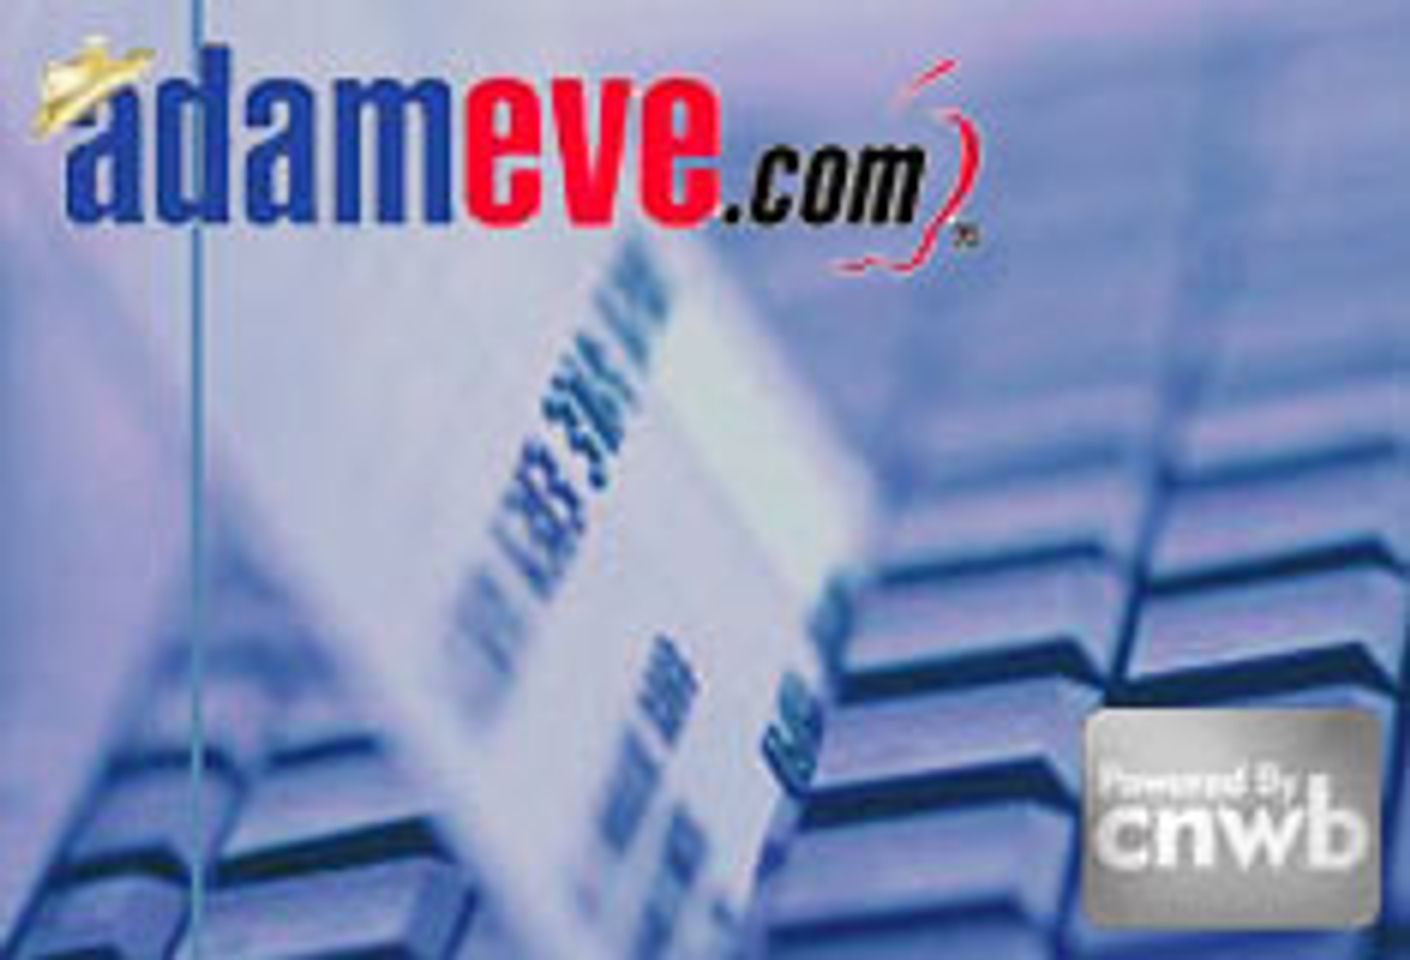 Adam & Eve Launches CNWB-Powered Credit Card Program